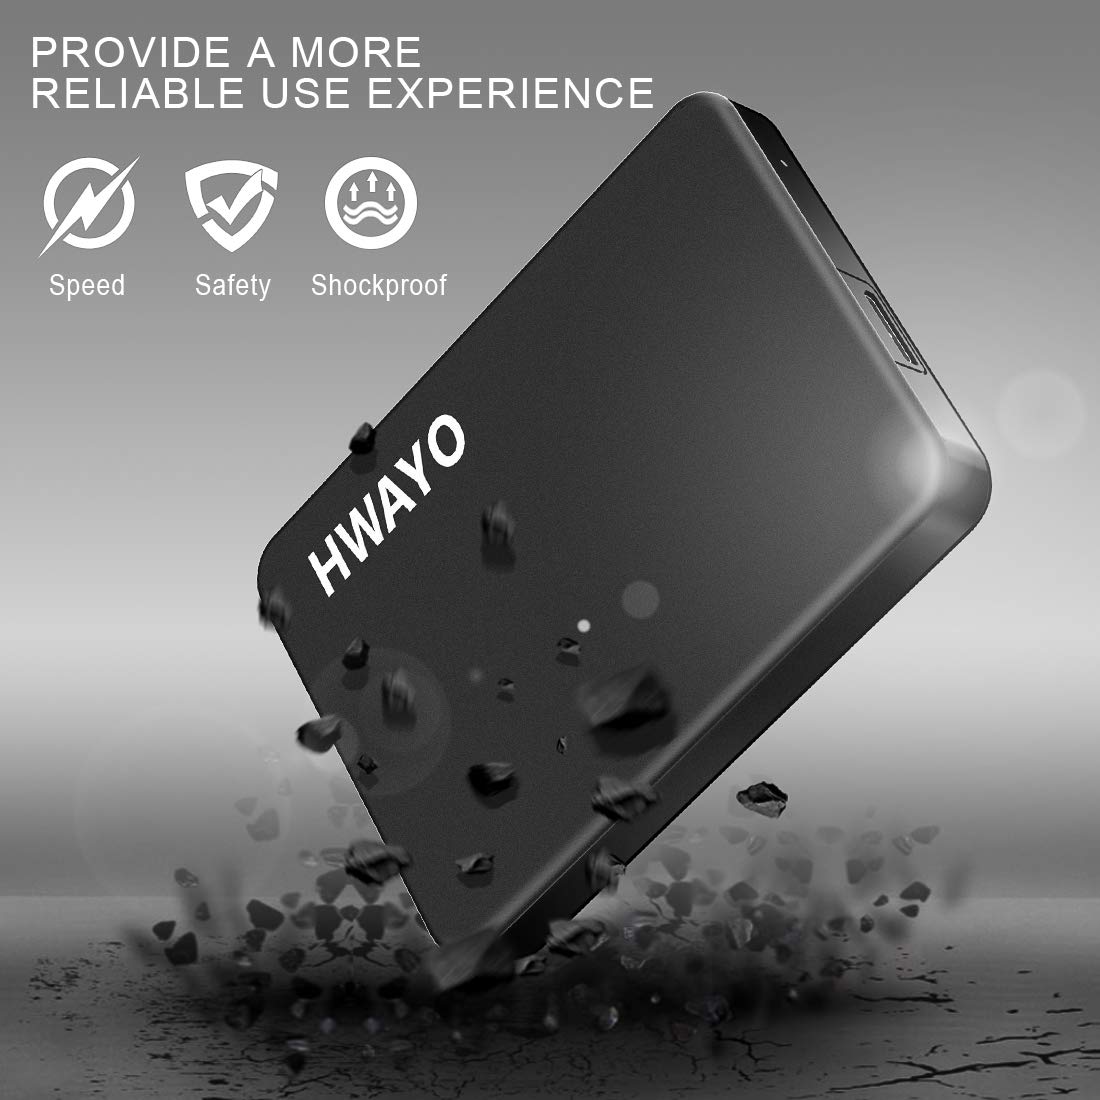 HWAYO 120GB Portable External Hard Drive Ultra Slim 2.5'' USB 3.0 HDD Storage for PC, Desktop, Laptop, MacBook, Chromebook